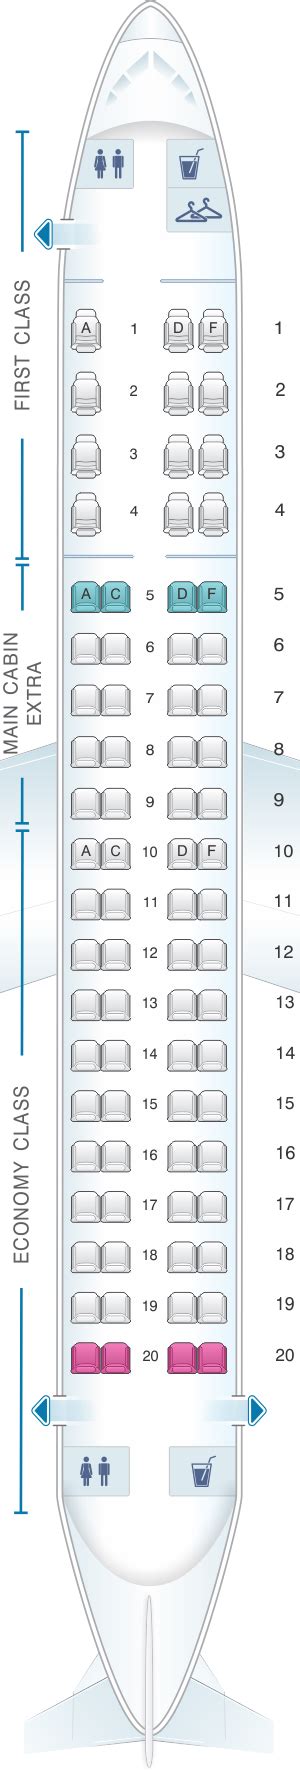 Seats 10. Pitch 31". Width 17.5". Recline 5"